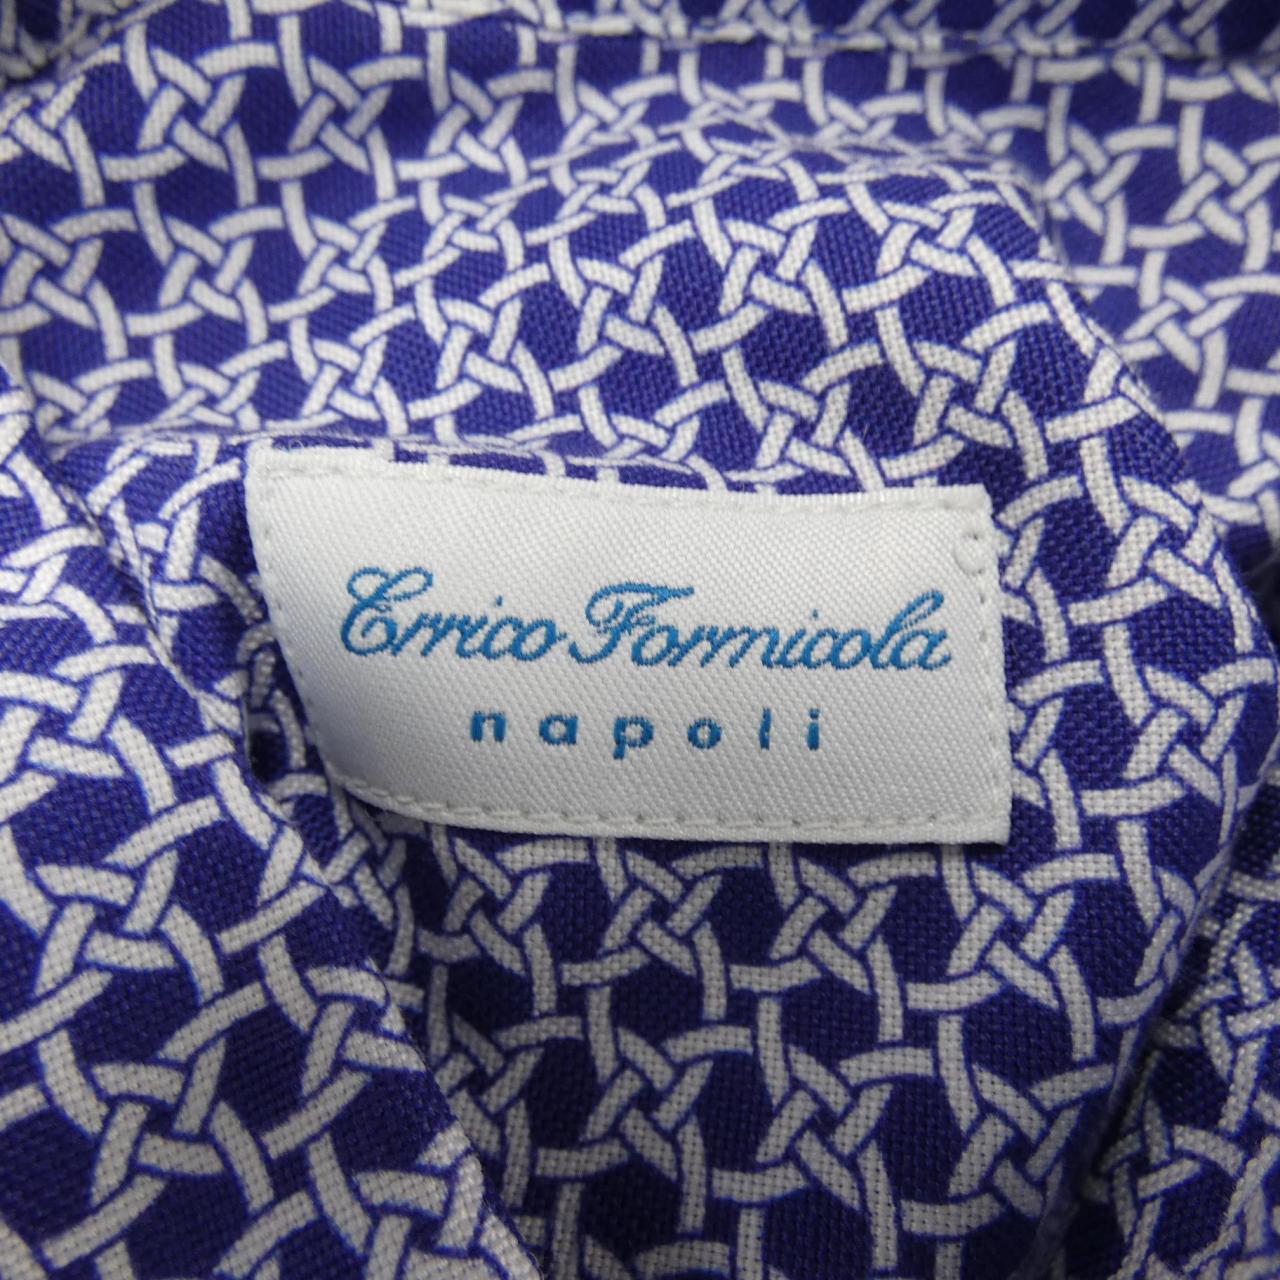 Ericco Formicola ERRICO FORMICOLA shirt